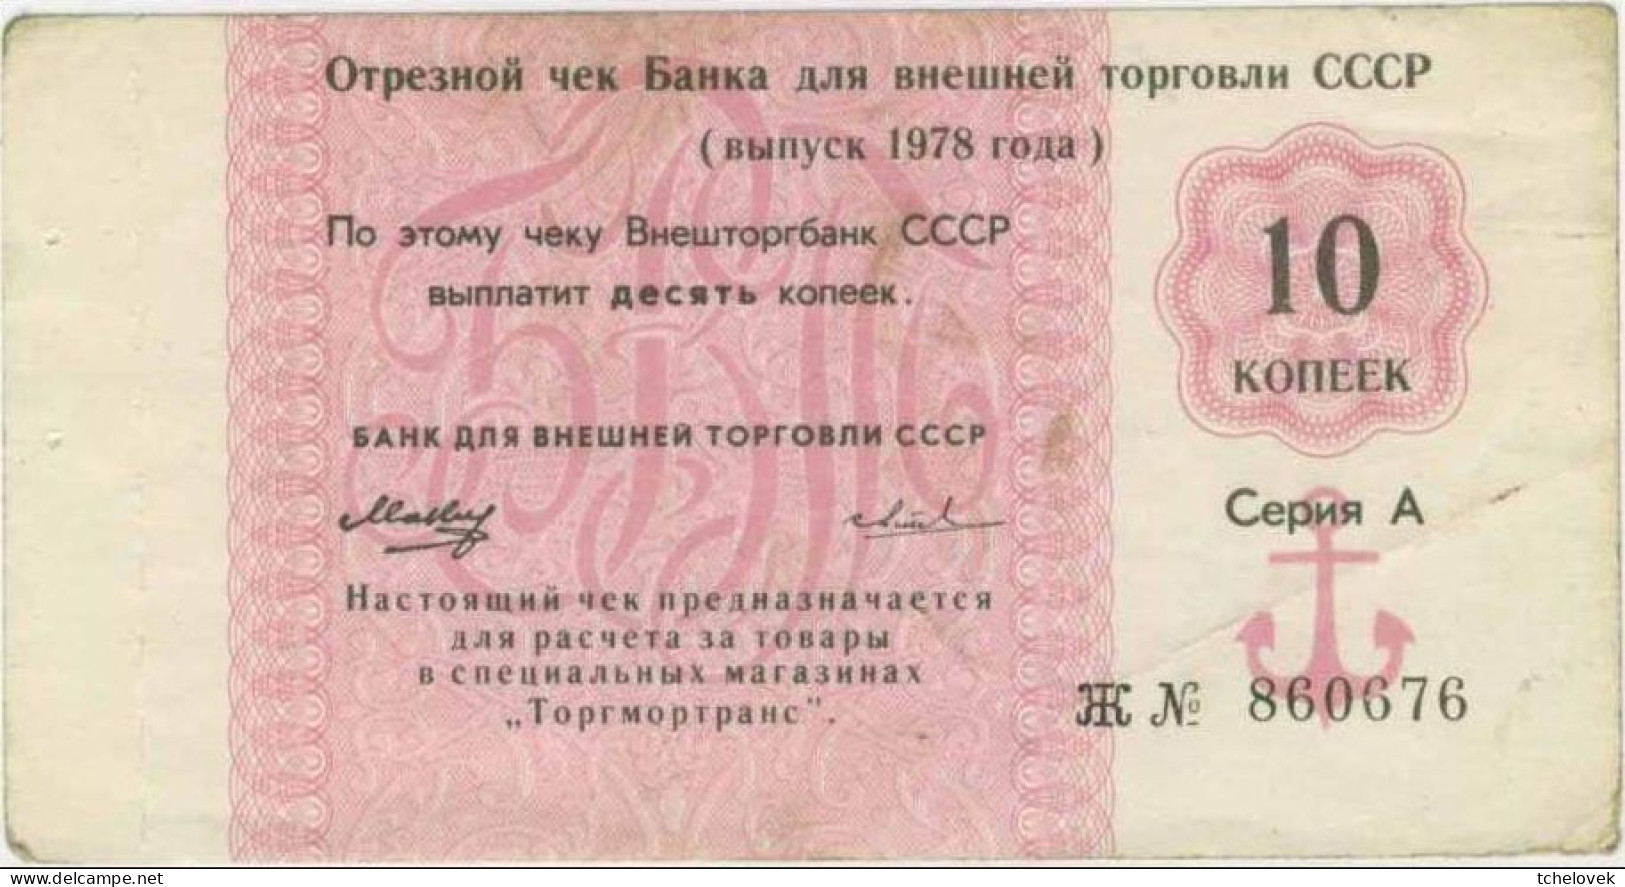 (Billets).Russie Russia URSS USSR Vneshposiltorg Vneshtorgbank 10 K 1978 N° 860676 Serie J. Foreign Exchange Certificate - Russie